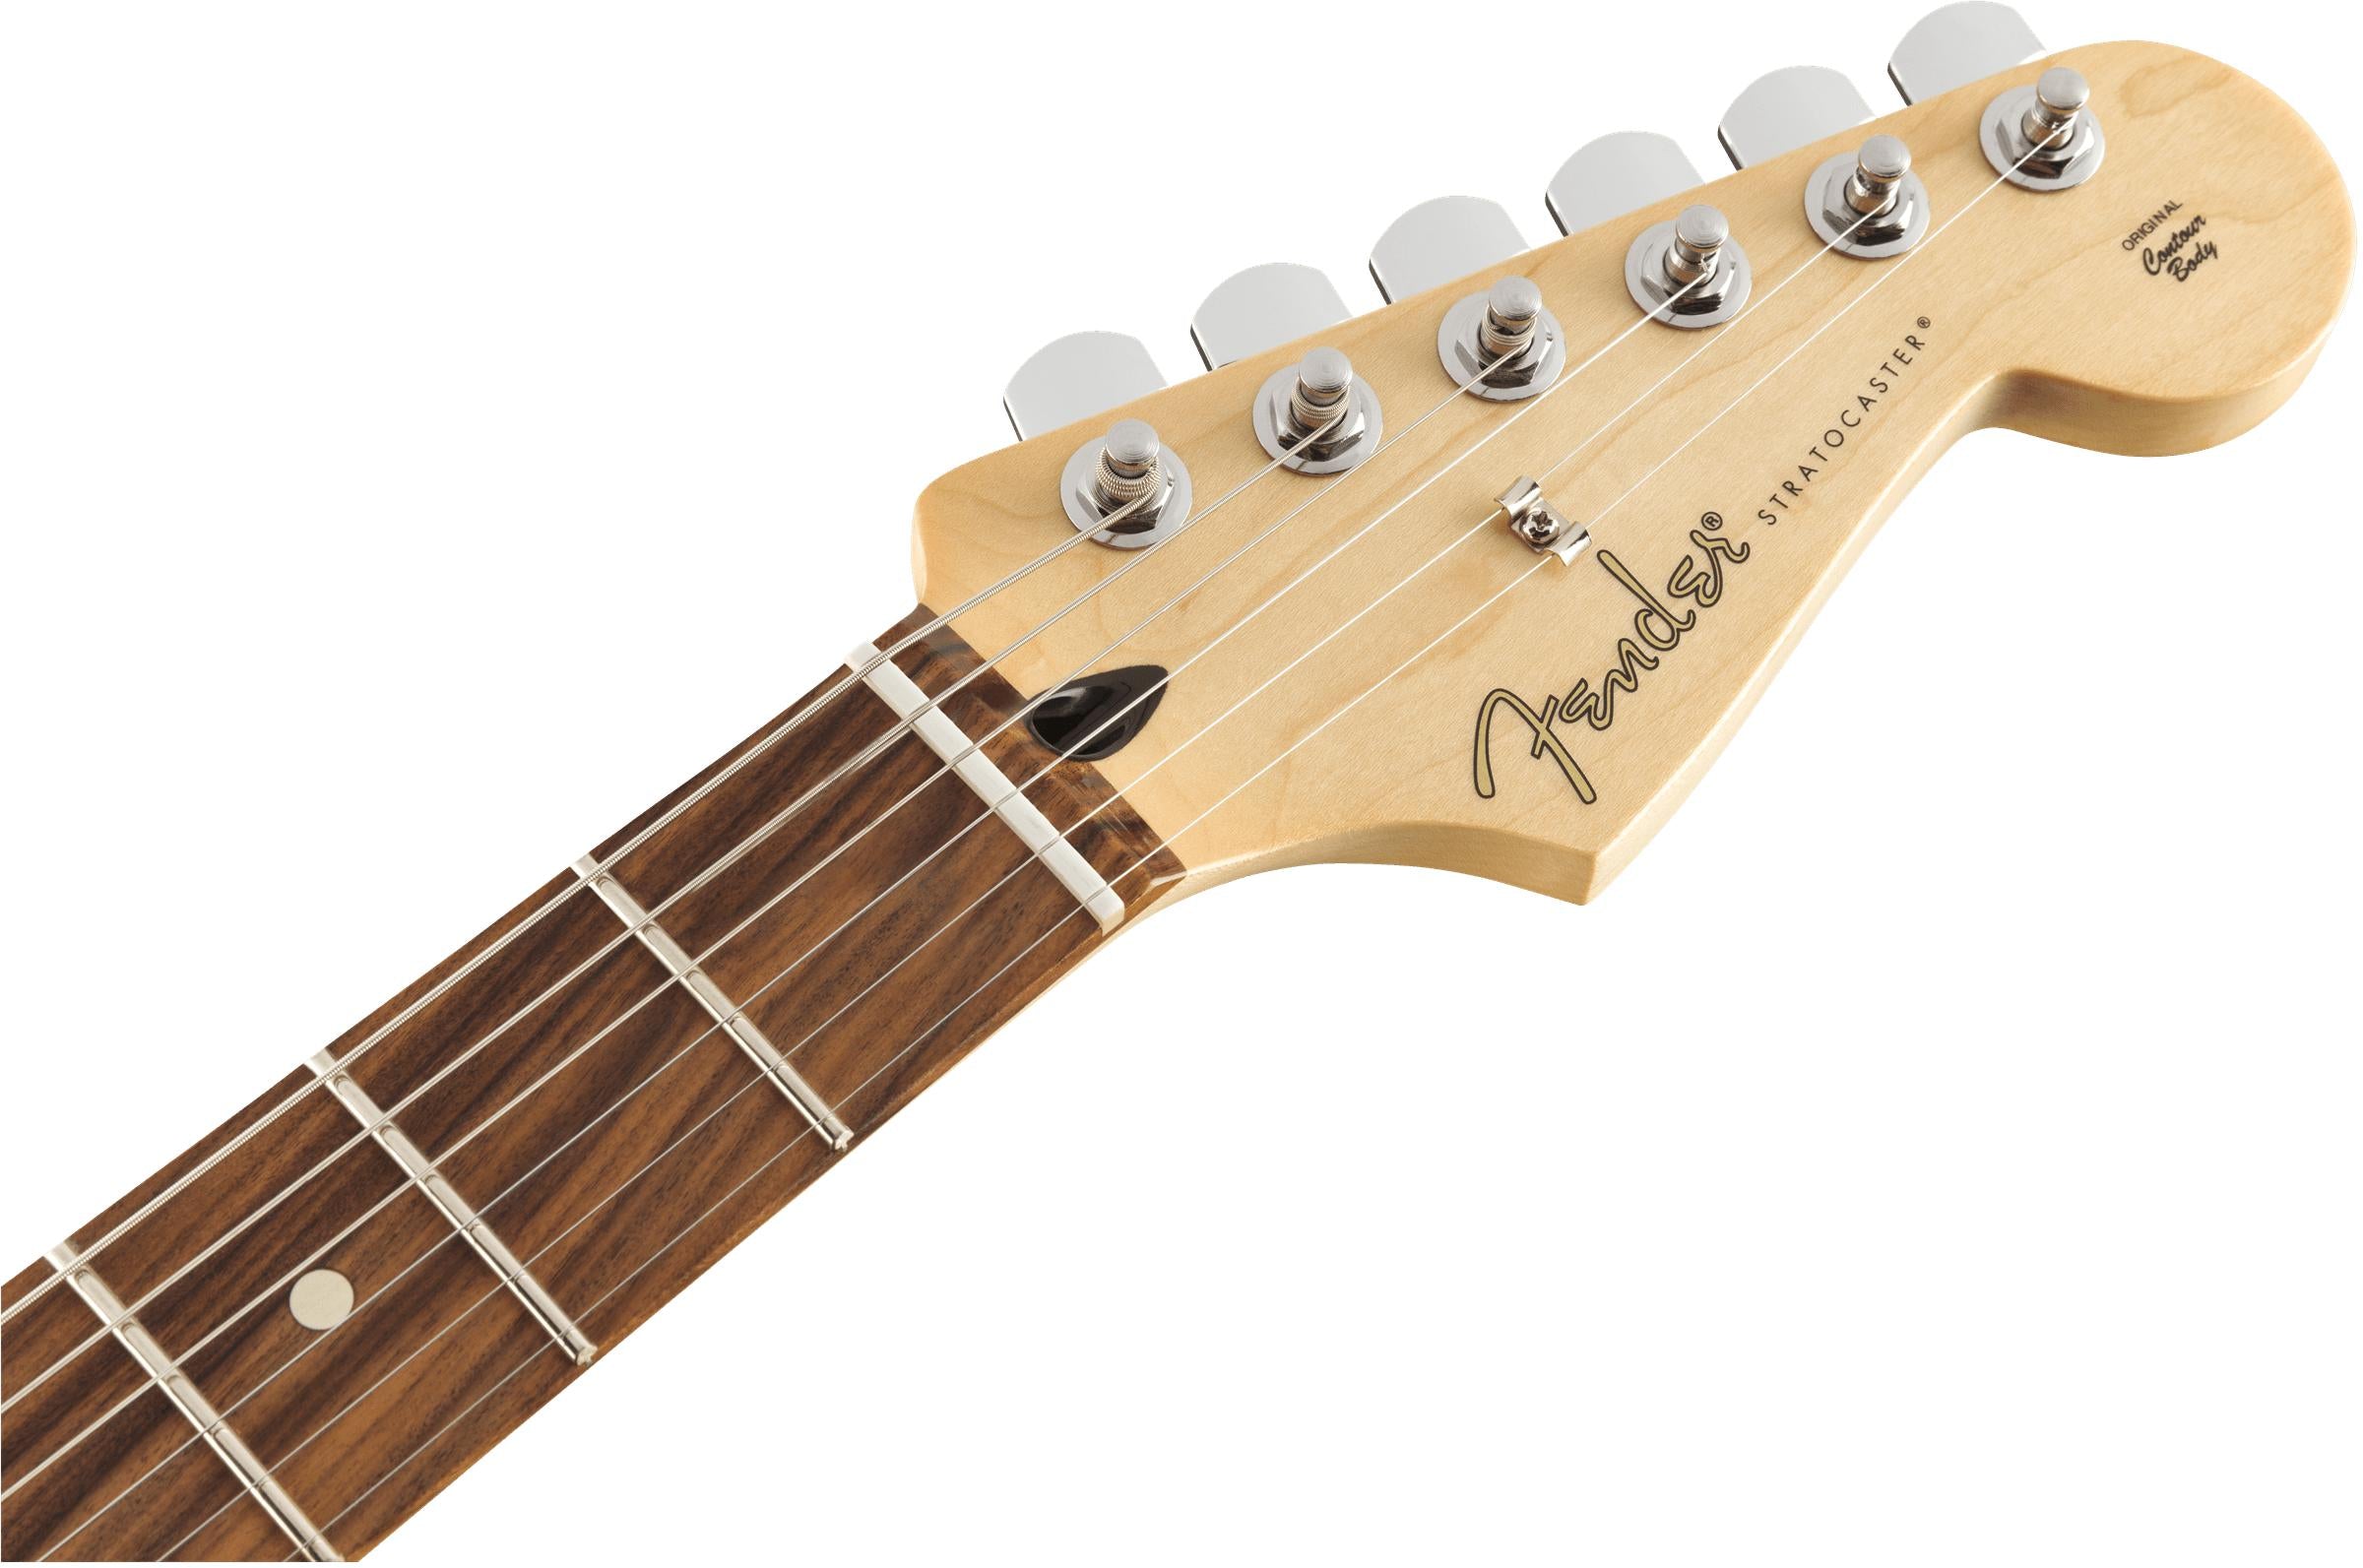 Fender Player Stratocaster HSH, Tobacco Sunburst